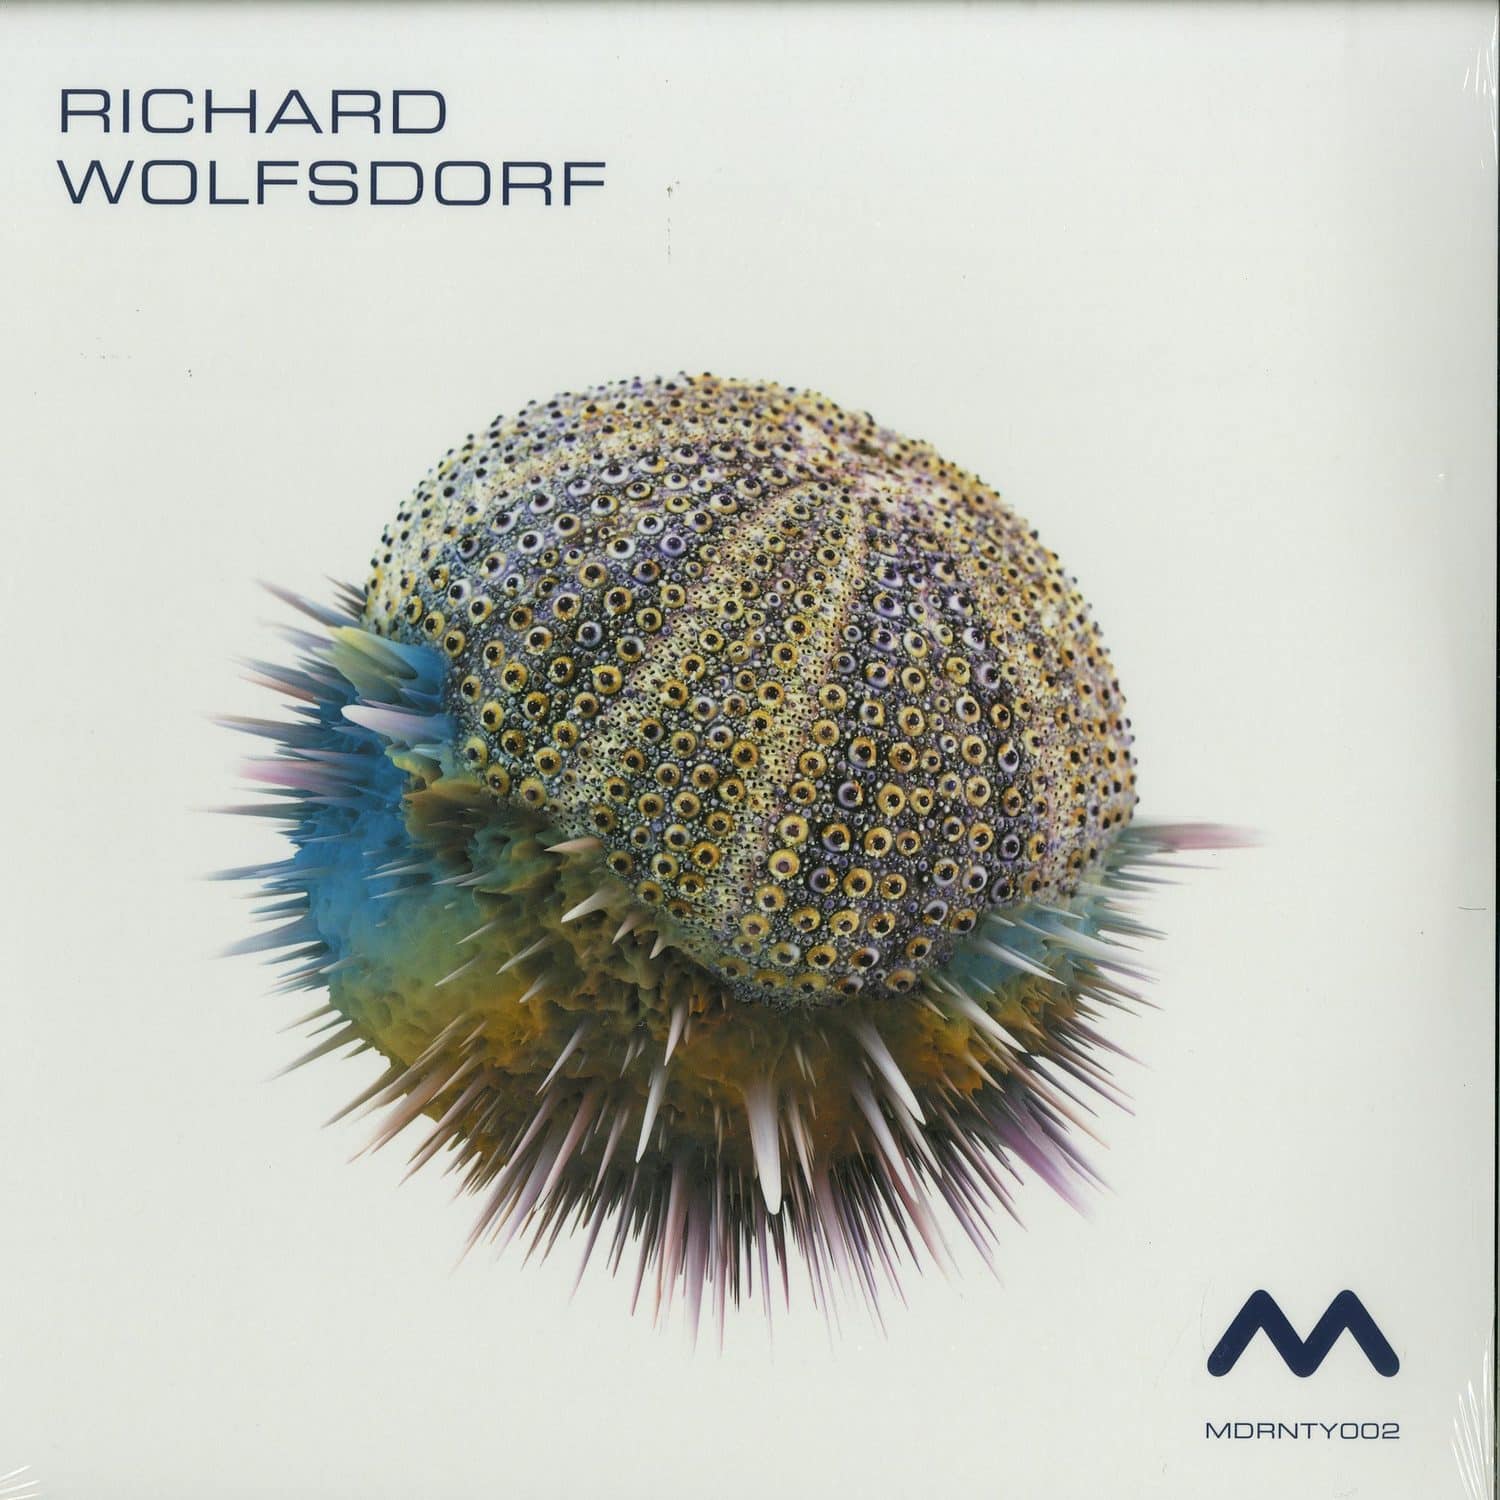 Richard Wolfsdorf - MDRNTY 002